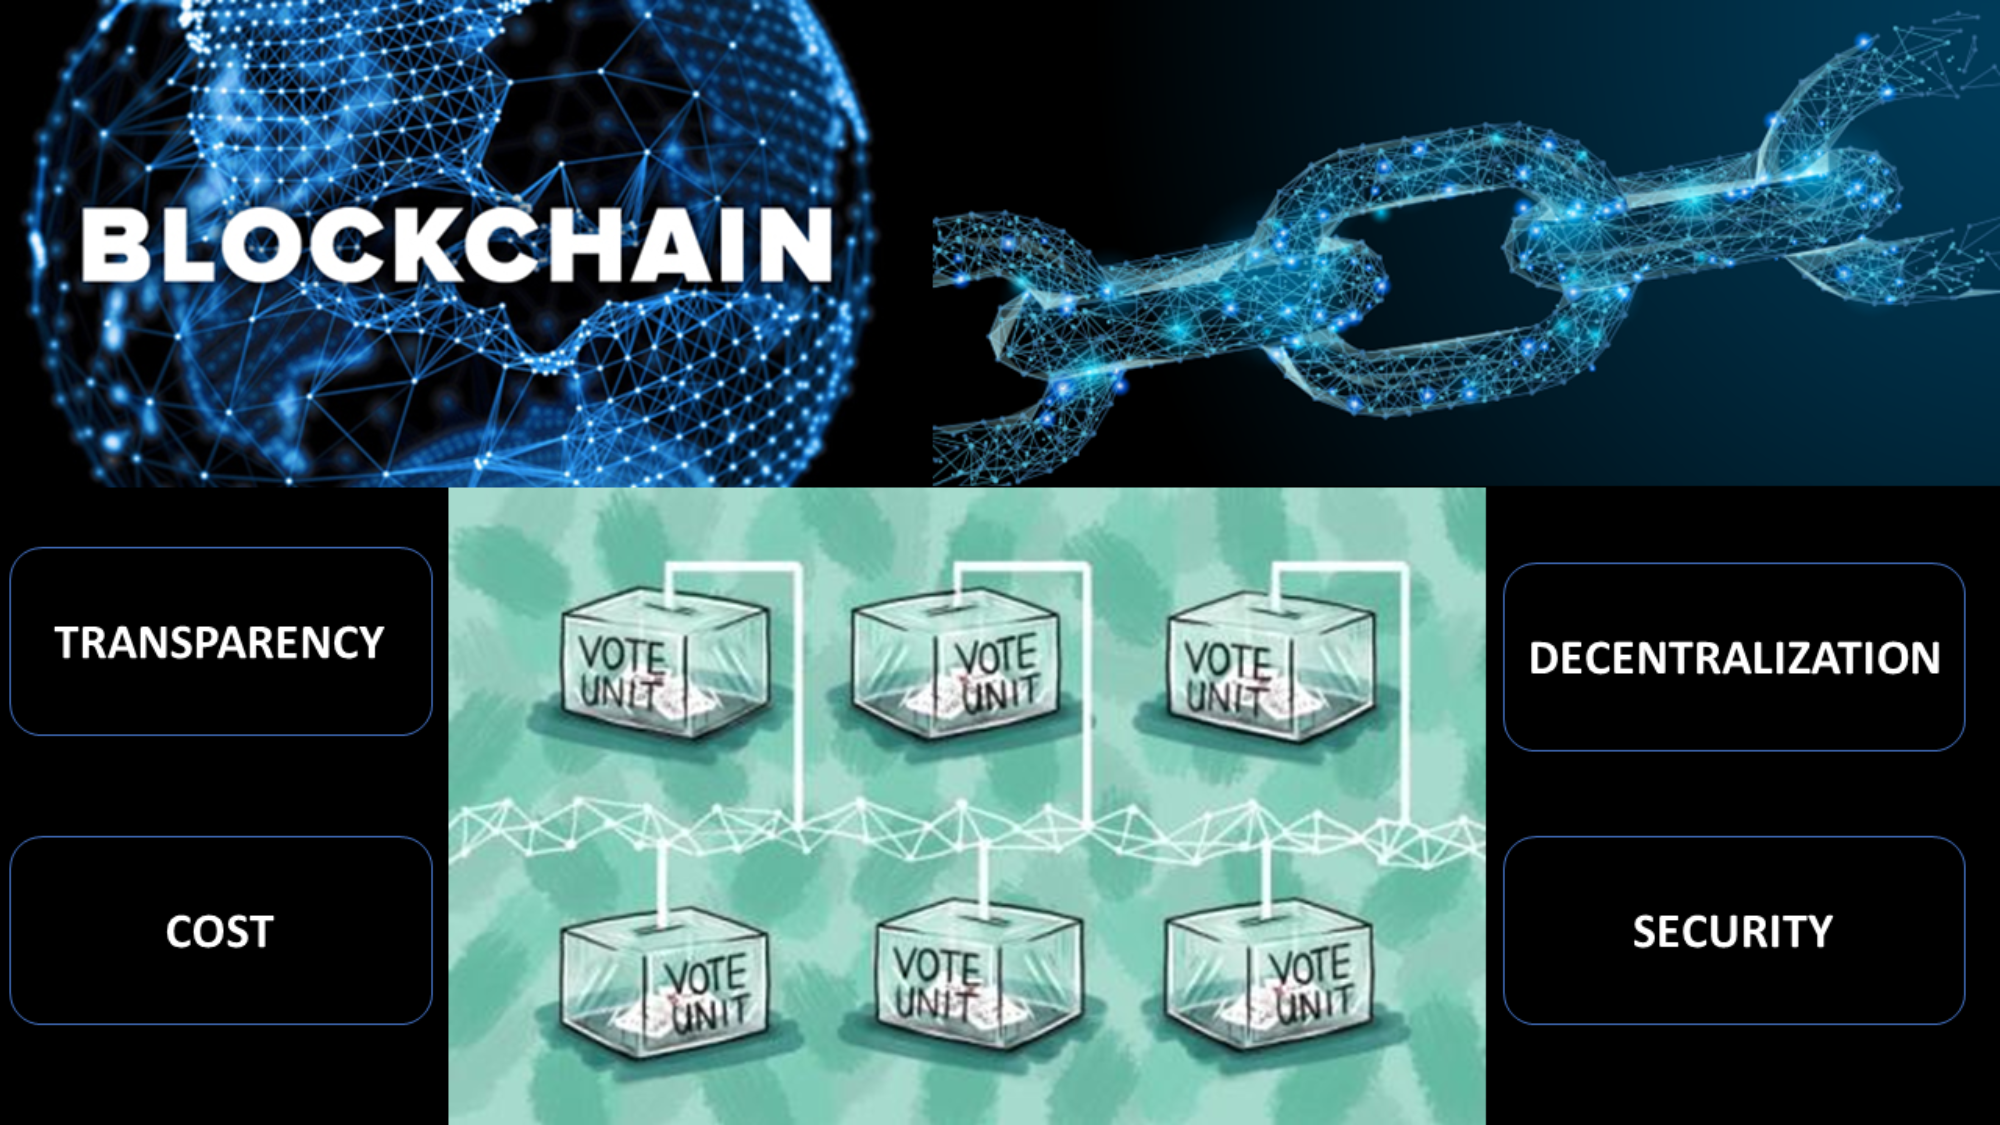 Blockchain technology benefits